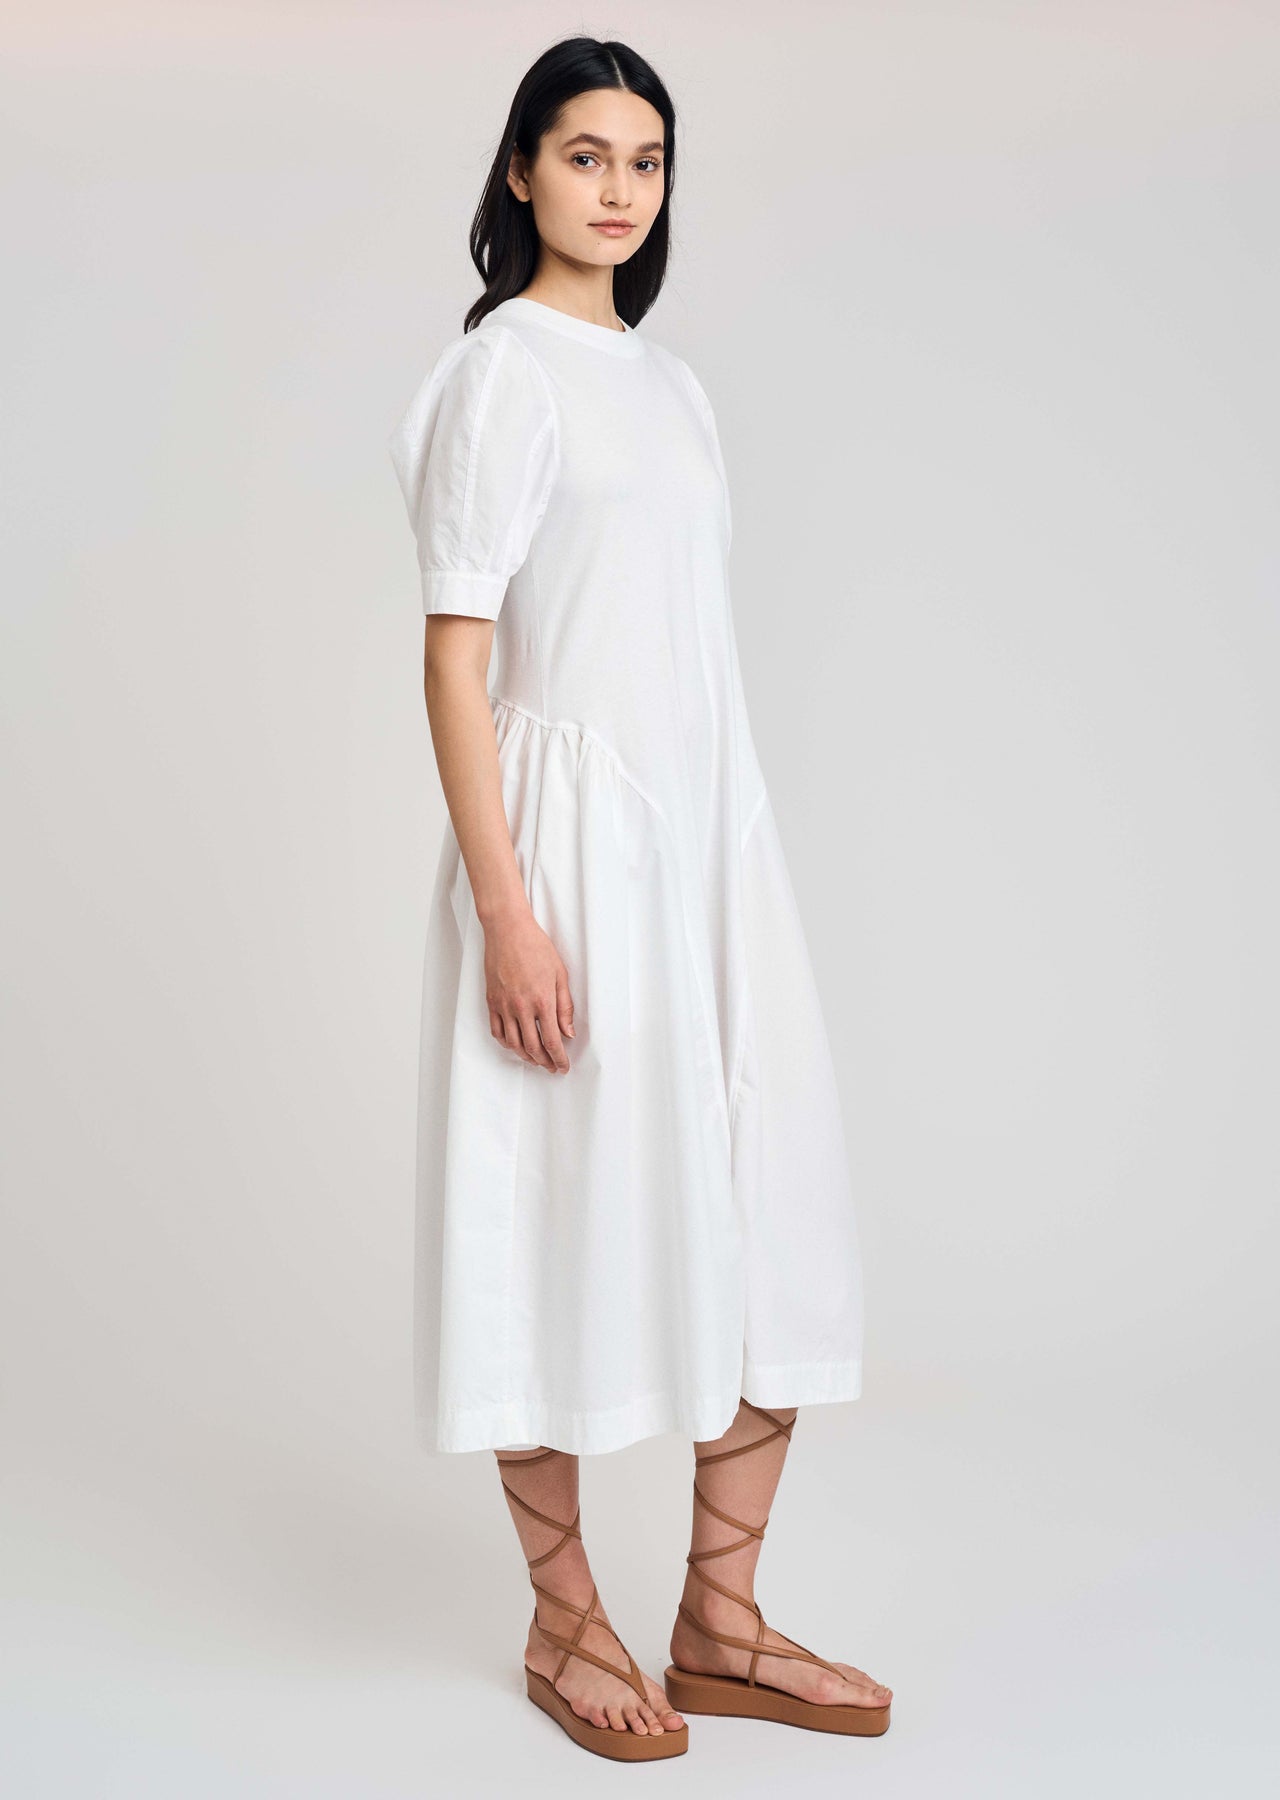 Women's Dresses & Skirts Collection | Derek Lam 10 Crosby